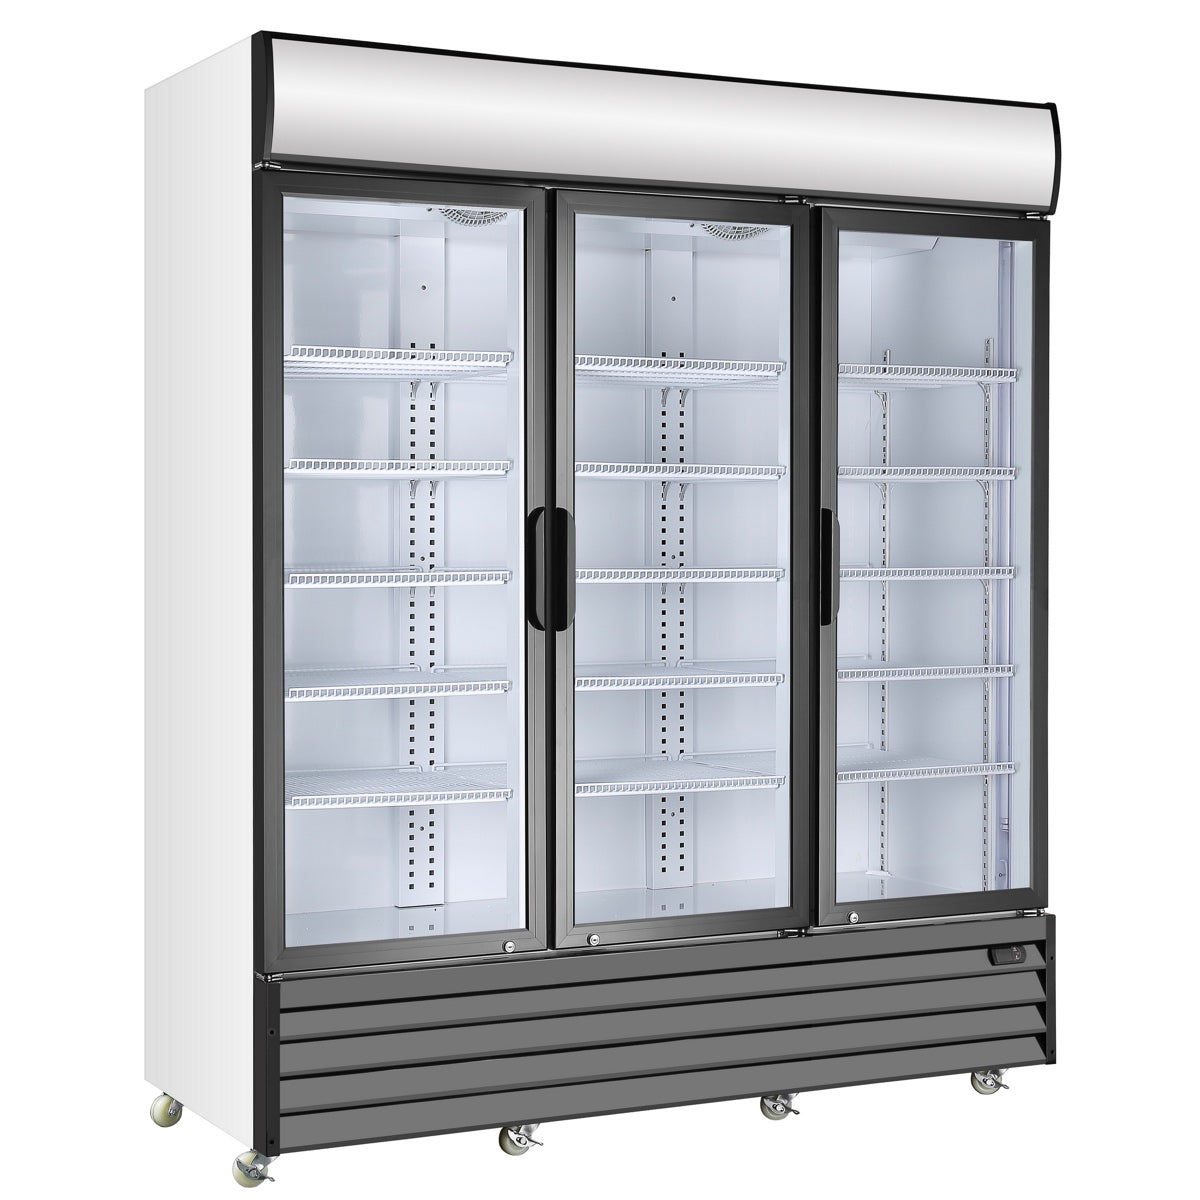 Kingsbottle 3-Door Showcase Refrigerator G1500-Wine Coolers-The Wine Cooler Club